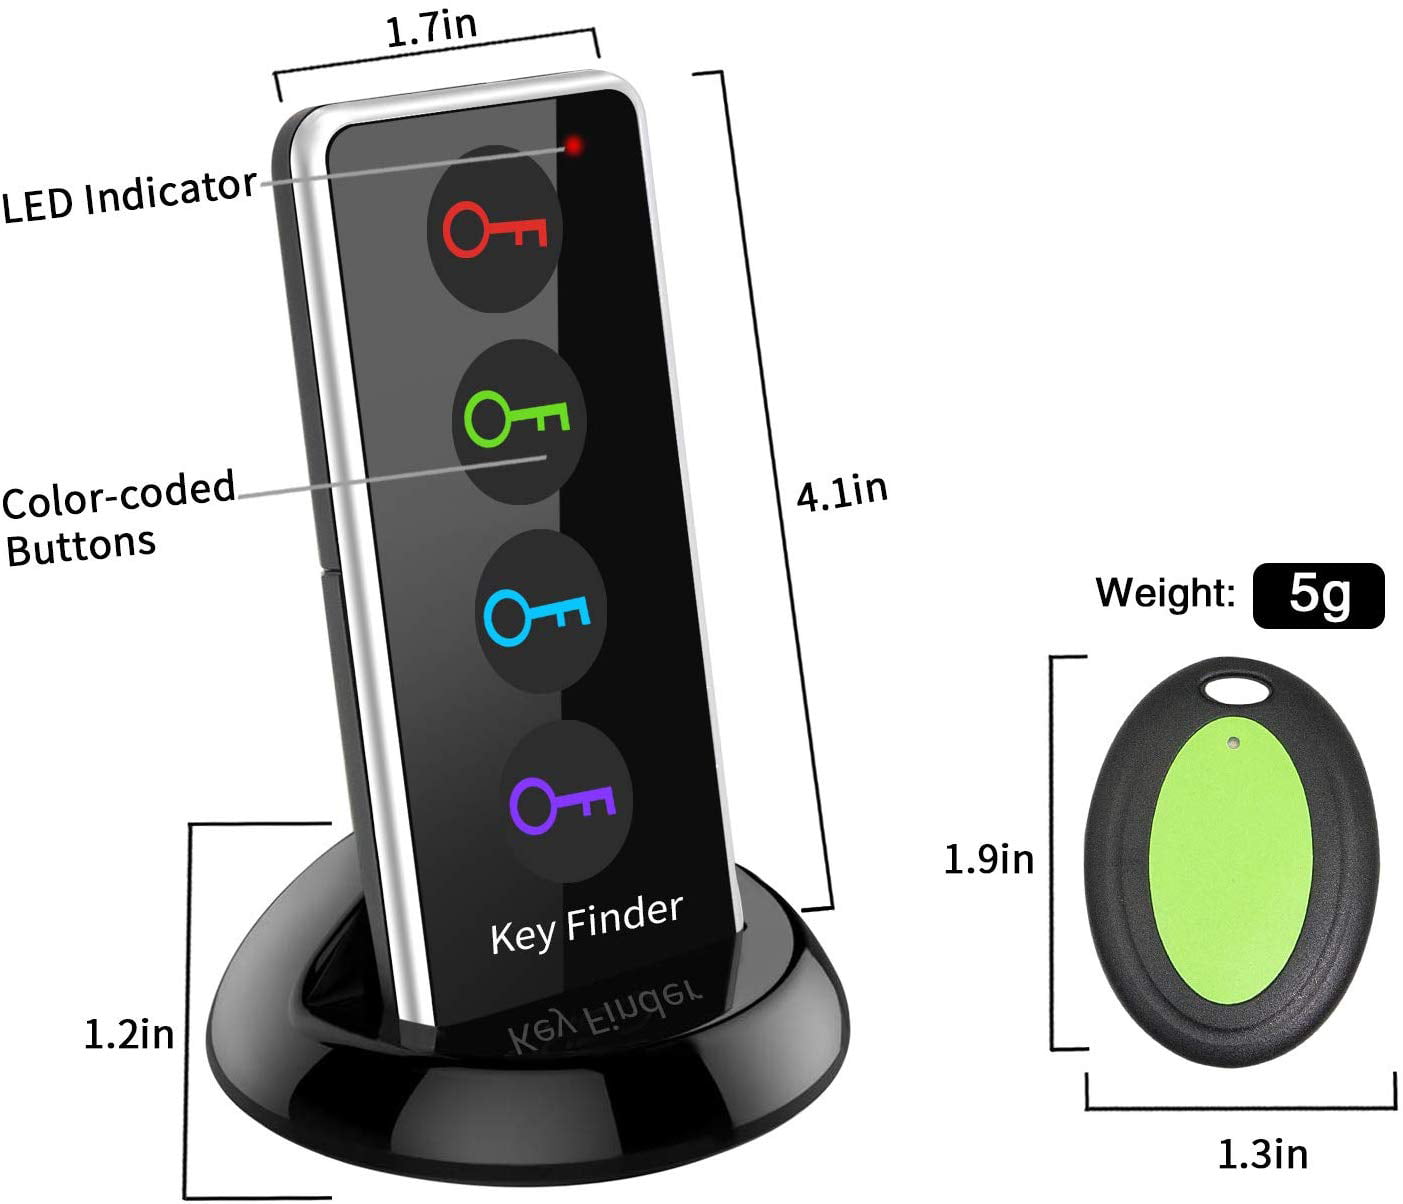 Key Finder FindKey Wireless Key RF Locator Item Anti-Lost Tag Alarm Reminder Tracker Remote Finder,1 RF Transmitter 4 Receivers,Phone Pets Keychain Wallet Luggage Tracking Tracker